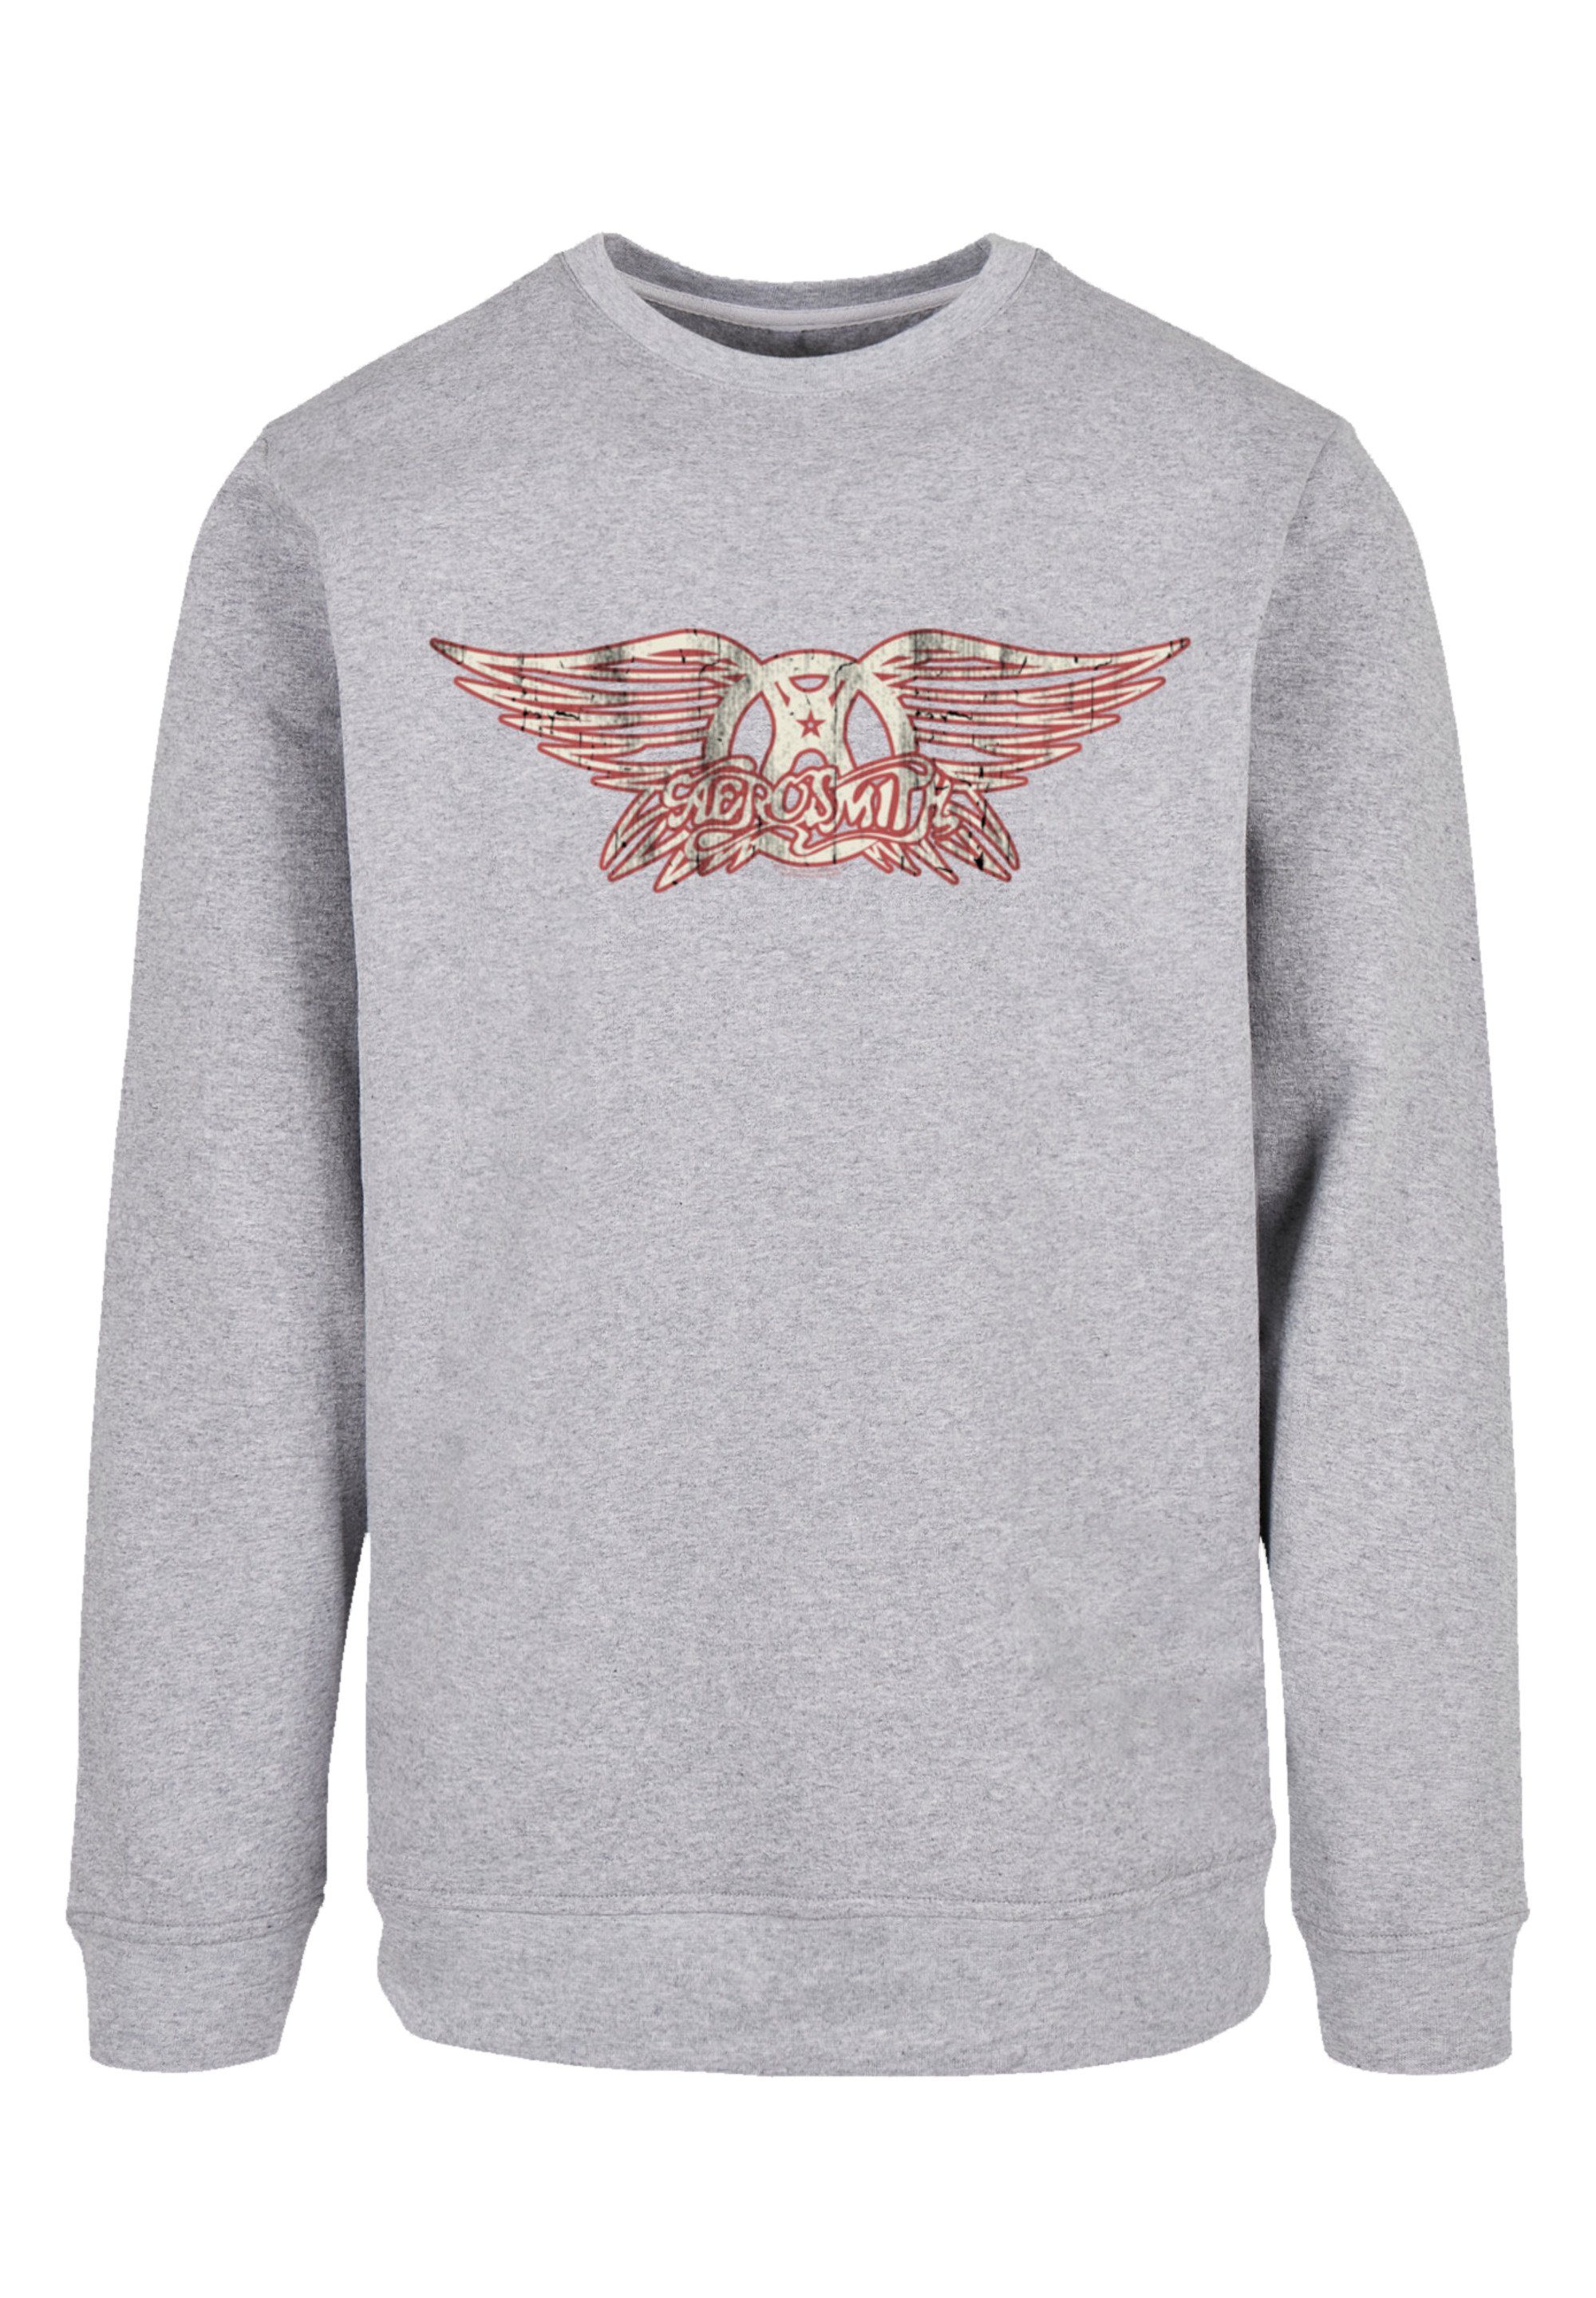 Aerosmith Logo Premium heather Qualität, Rock Band F4NT4STIC Rock-Musik, Band grey Sweatshirt